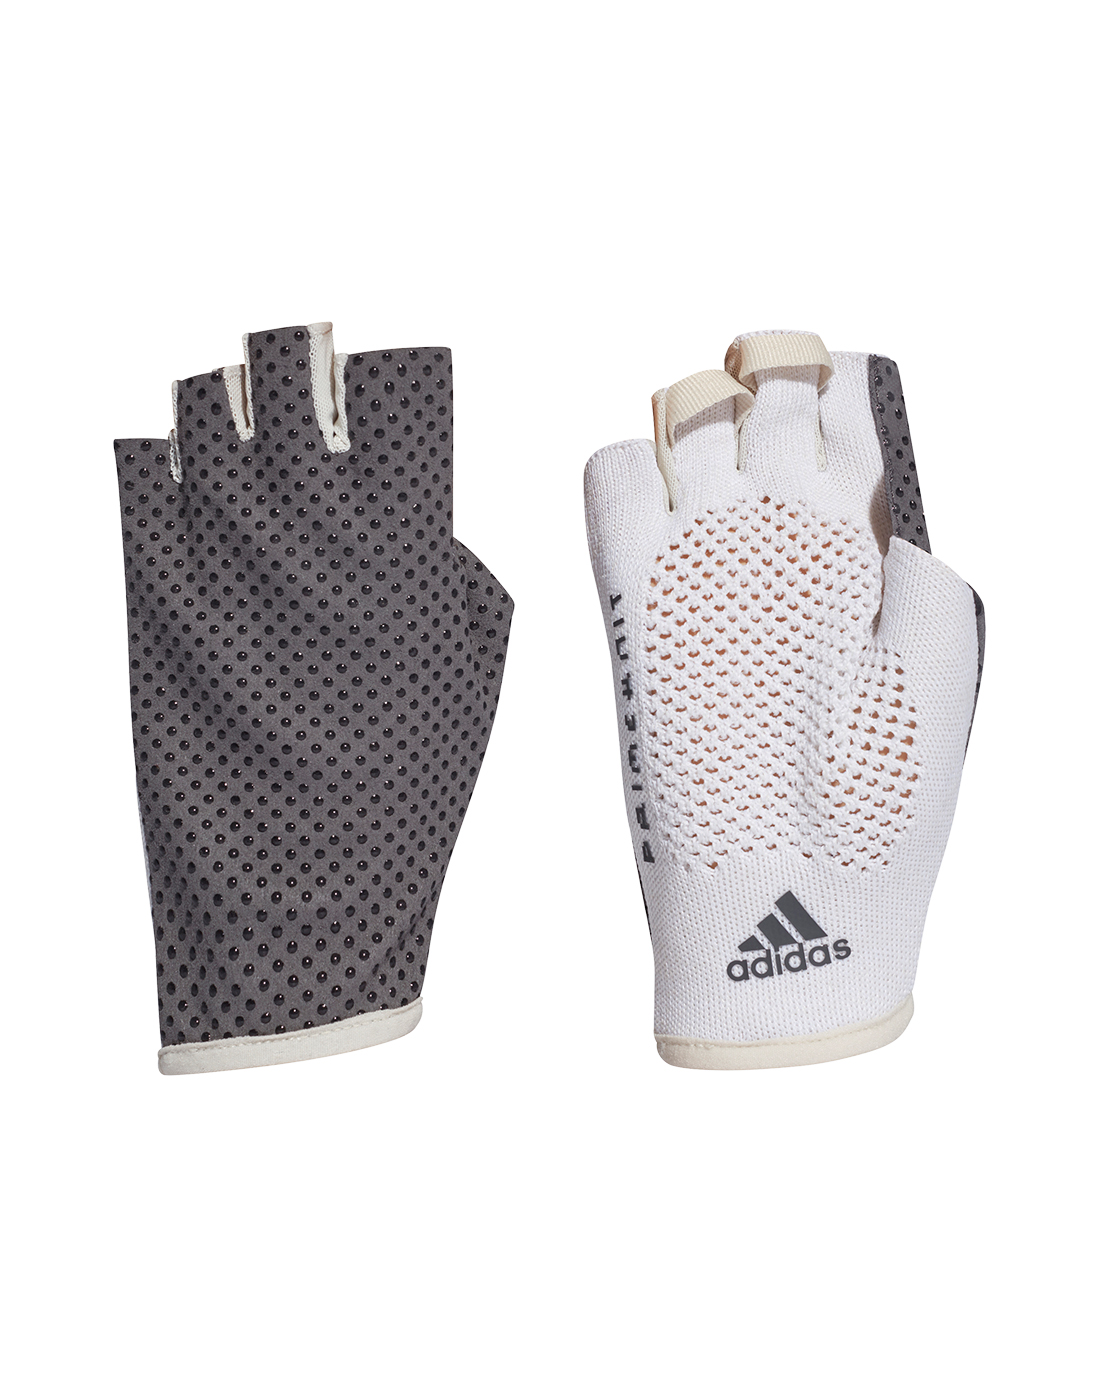 adidas primeknit gloves